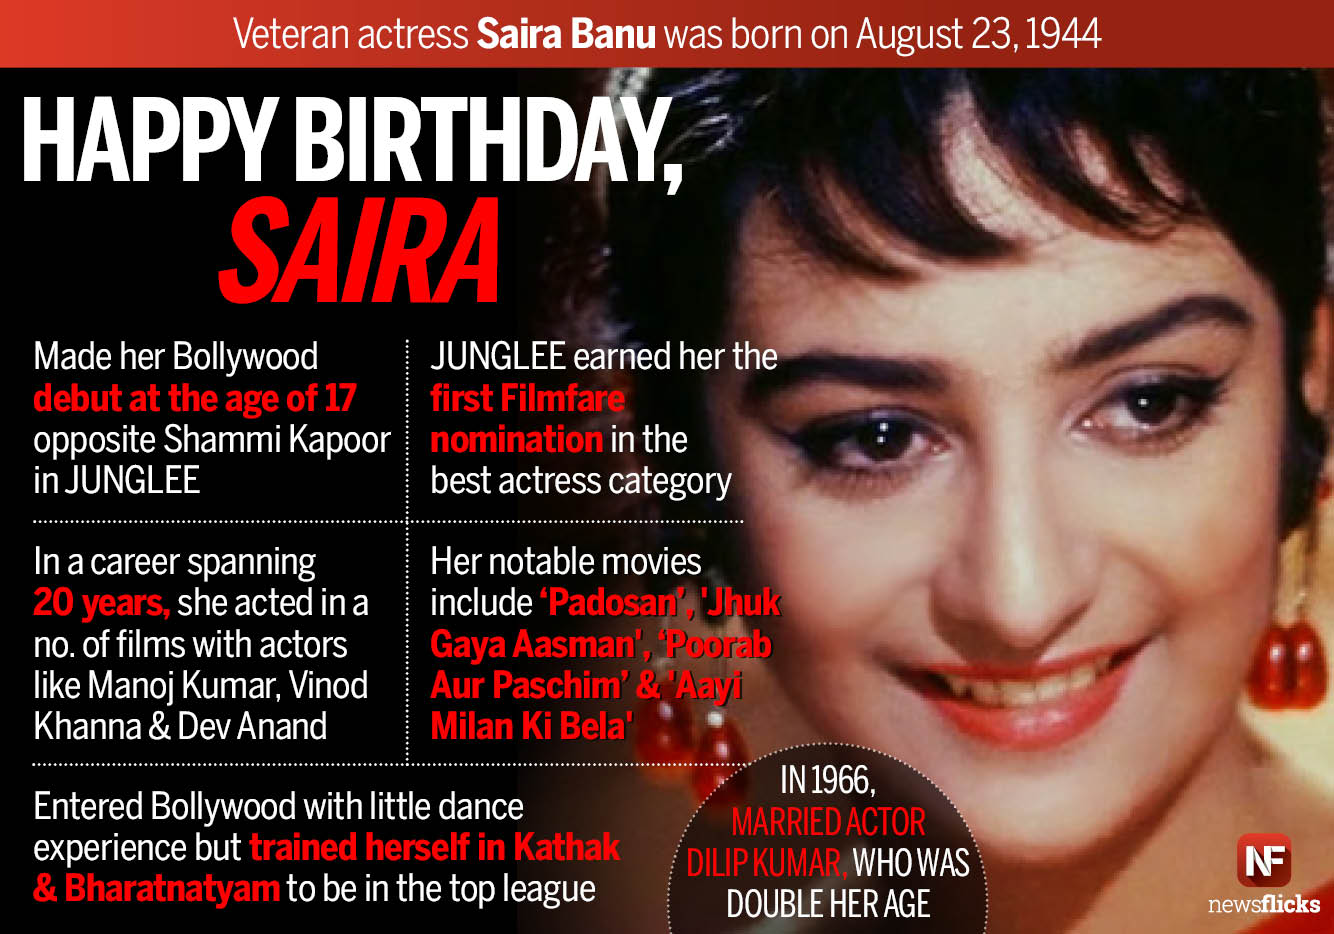 Wishing Saira Banu Happy Birthday. Wishing her all happiness and good health. 